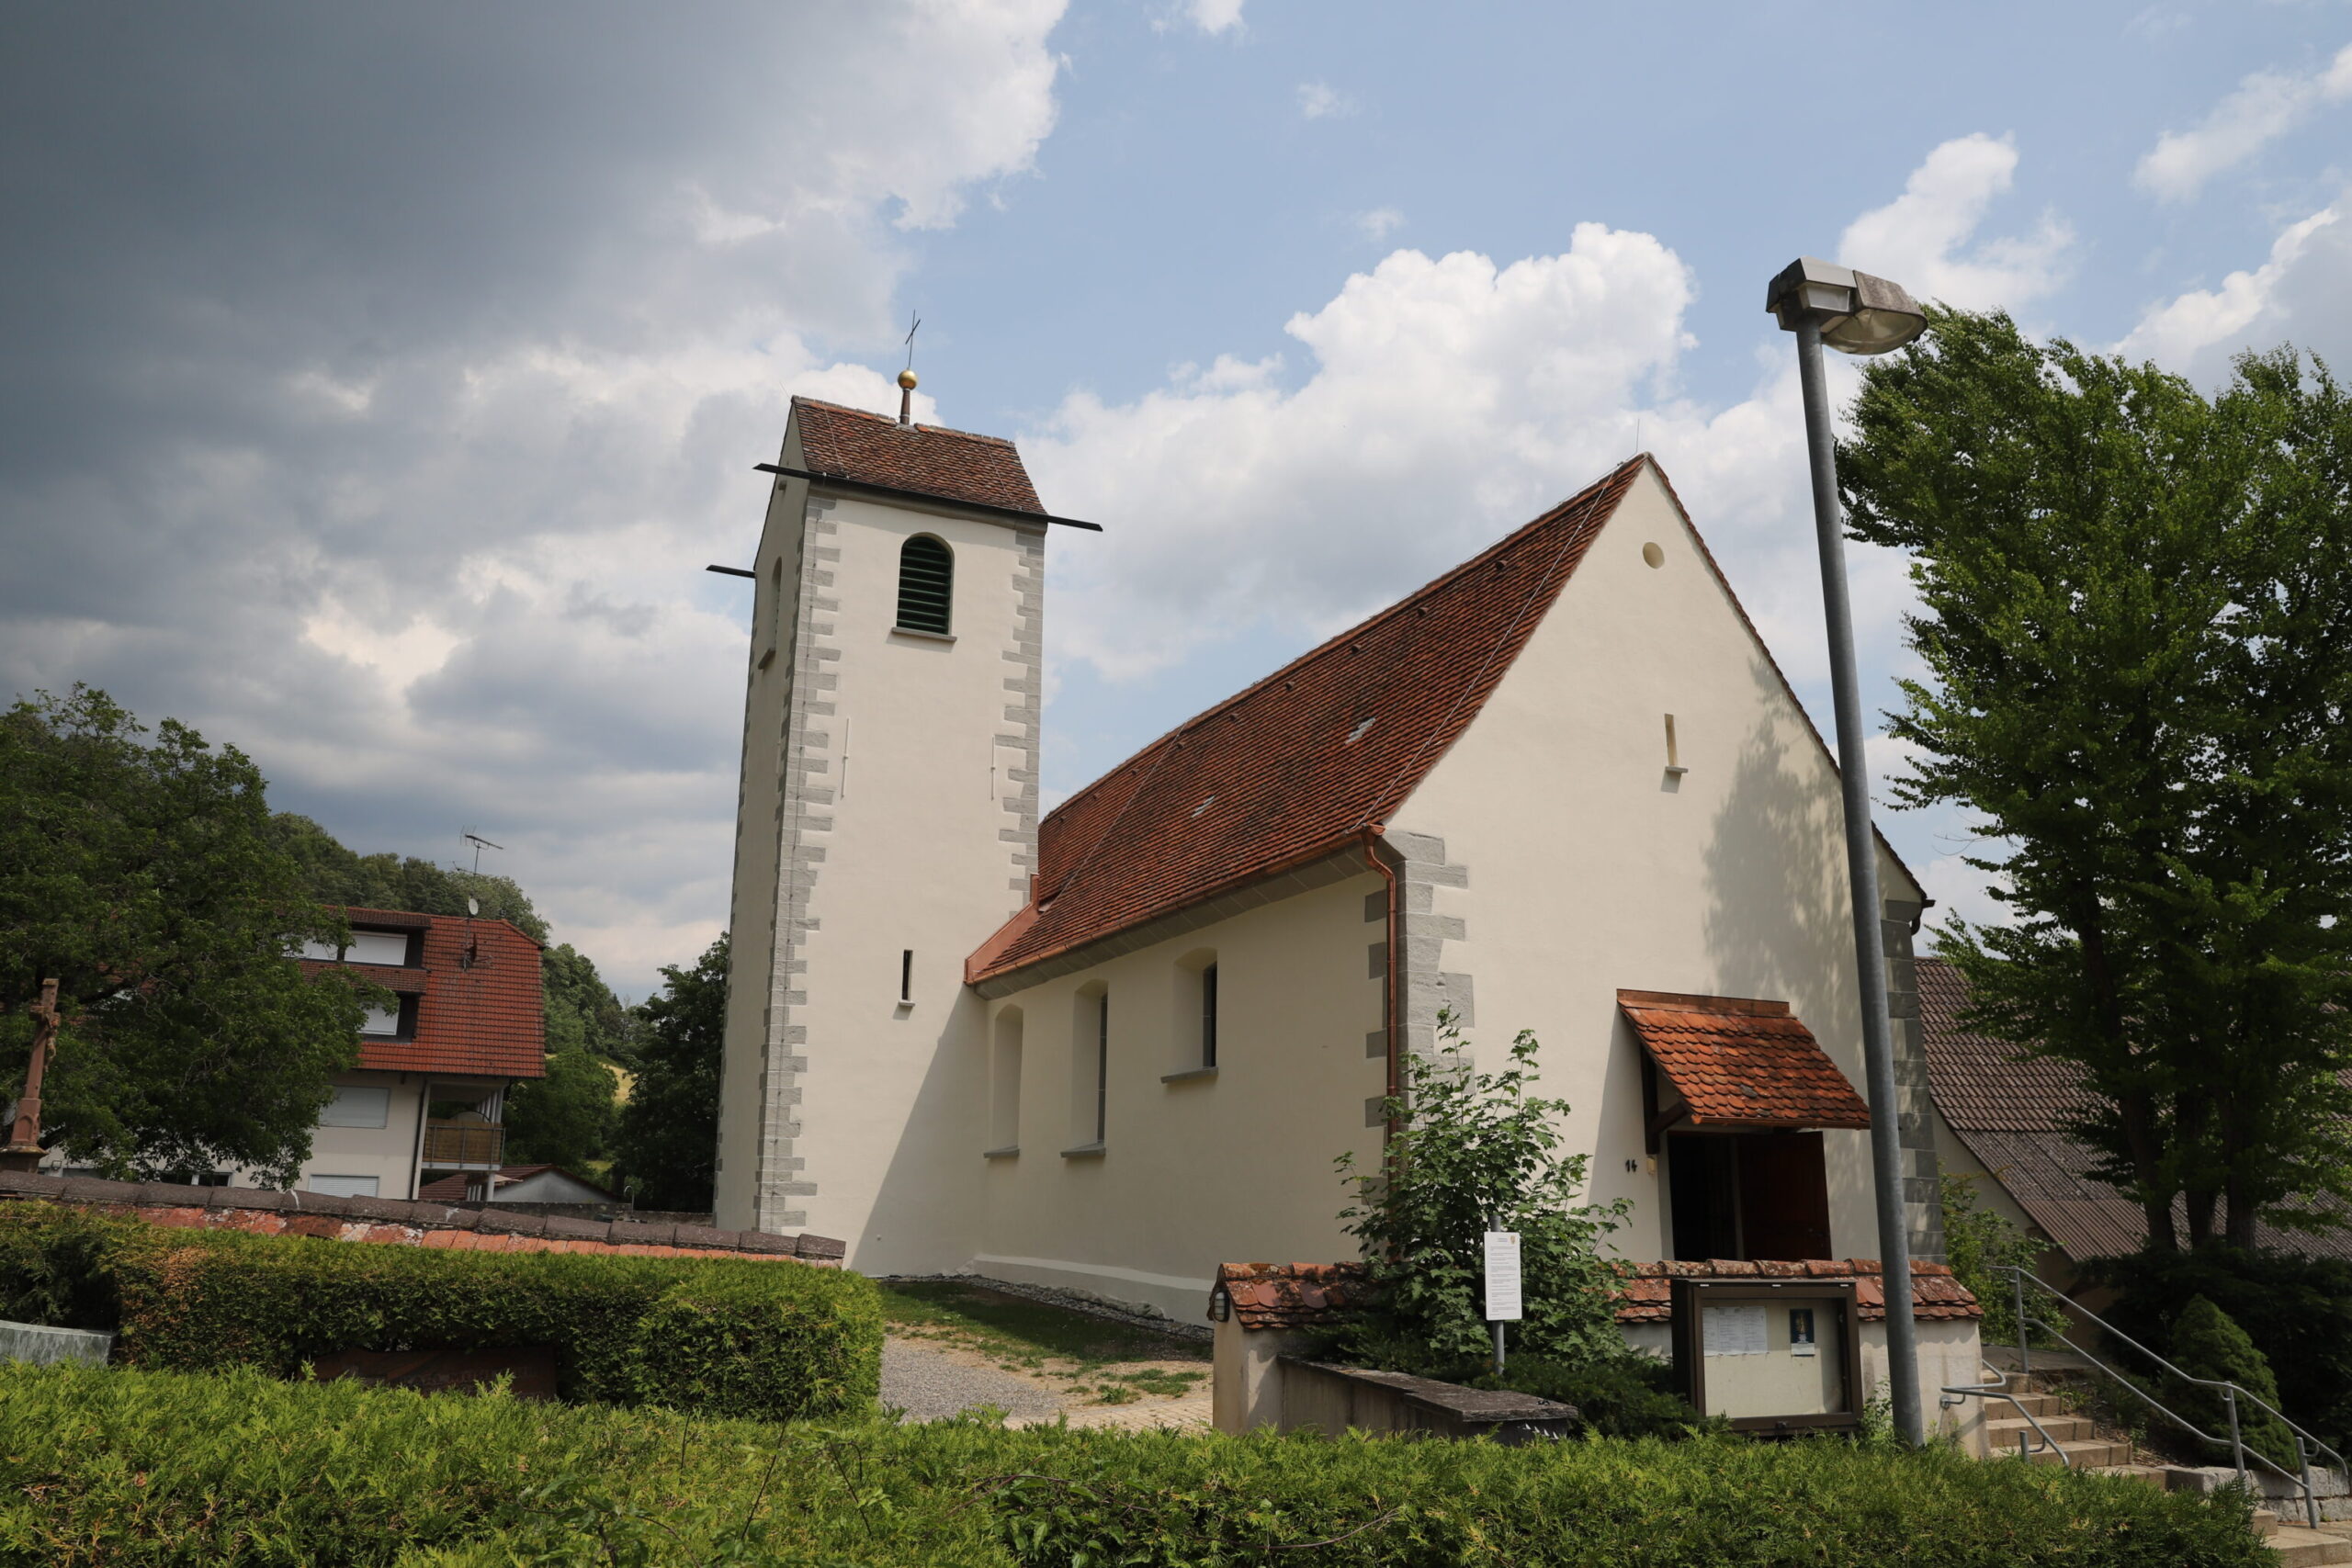 Kirche, weiß mit rotem Dach